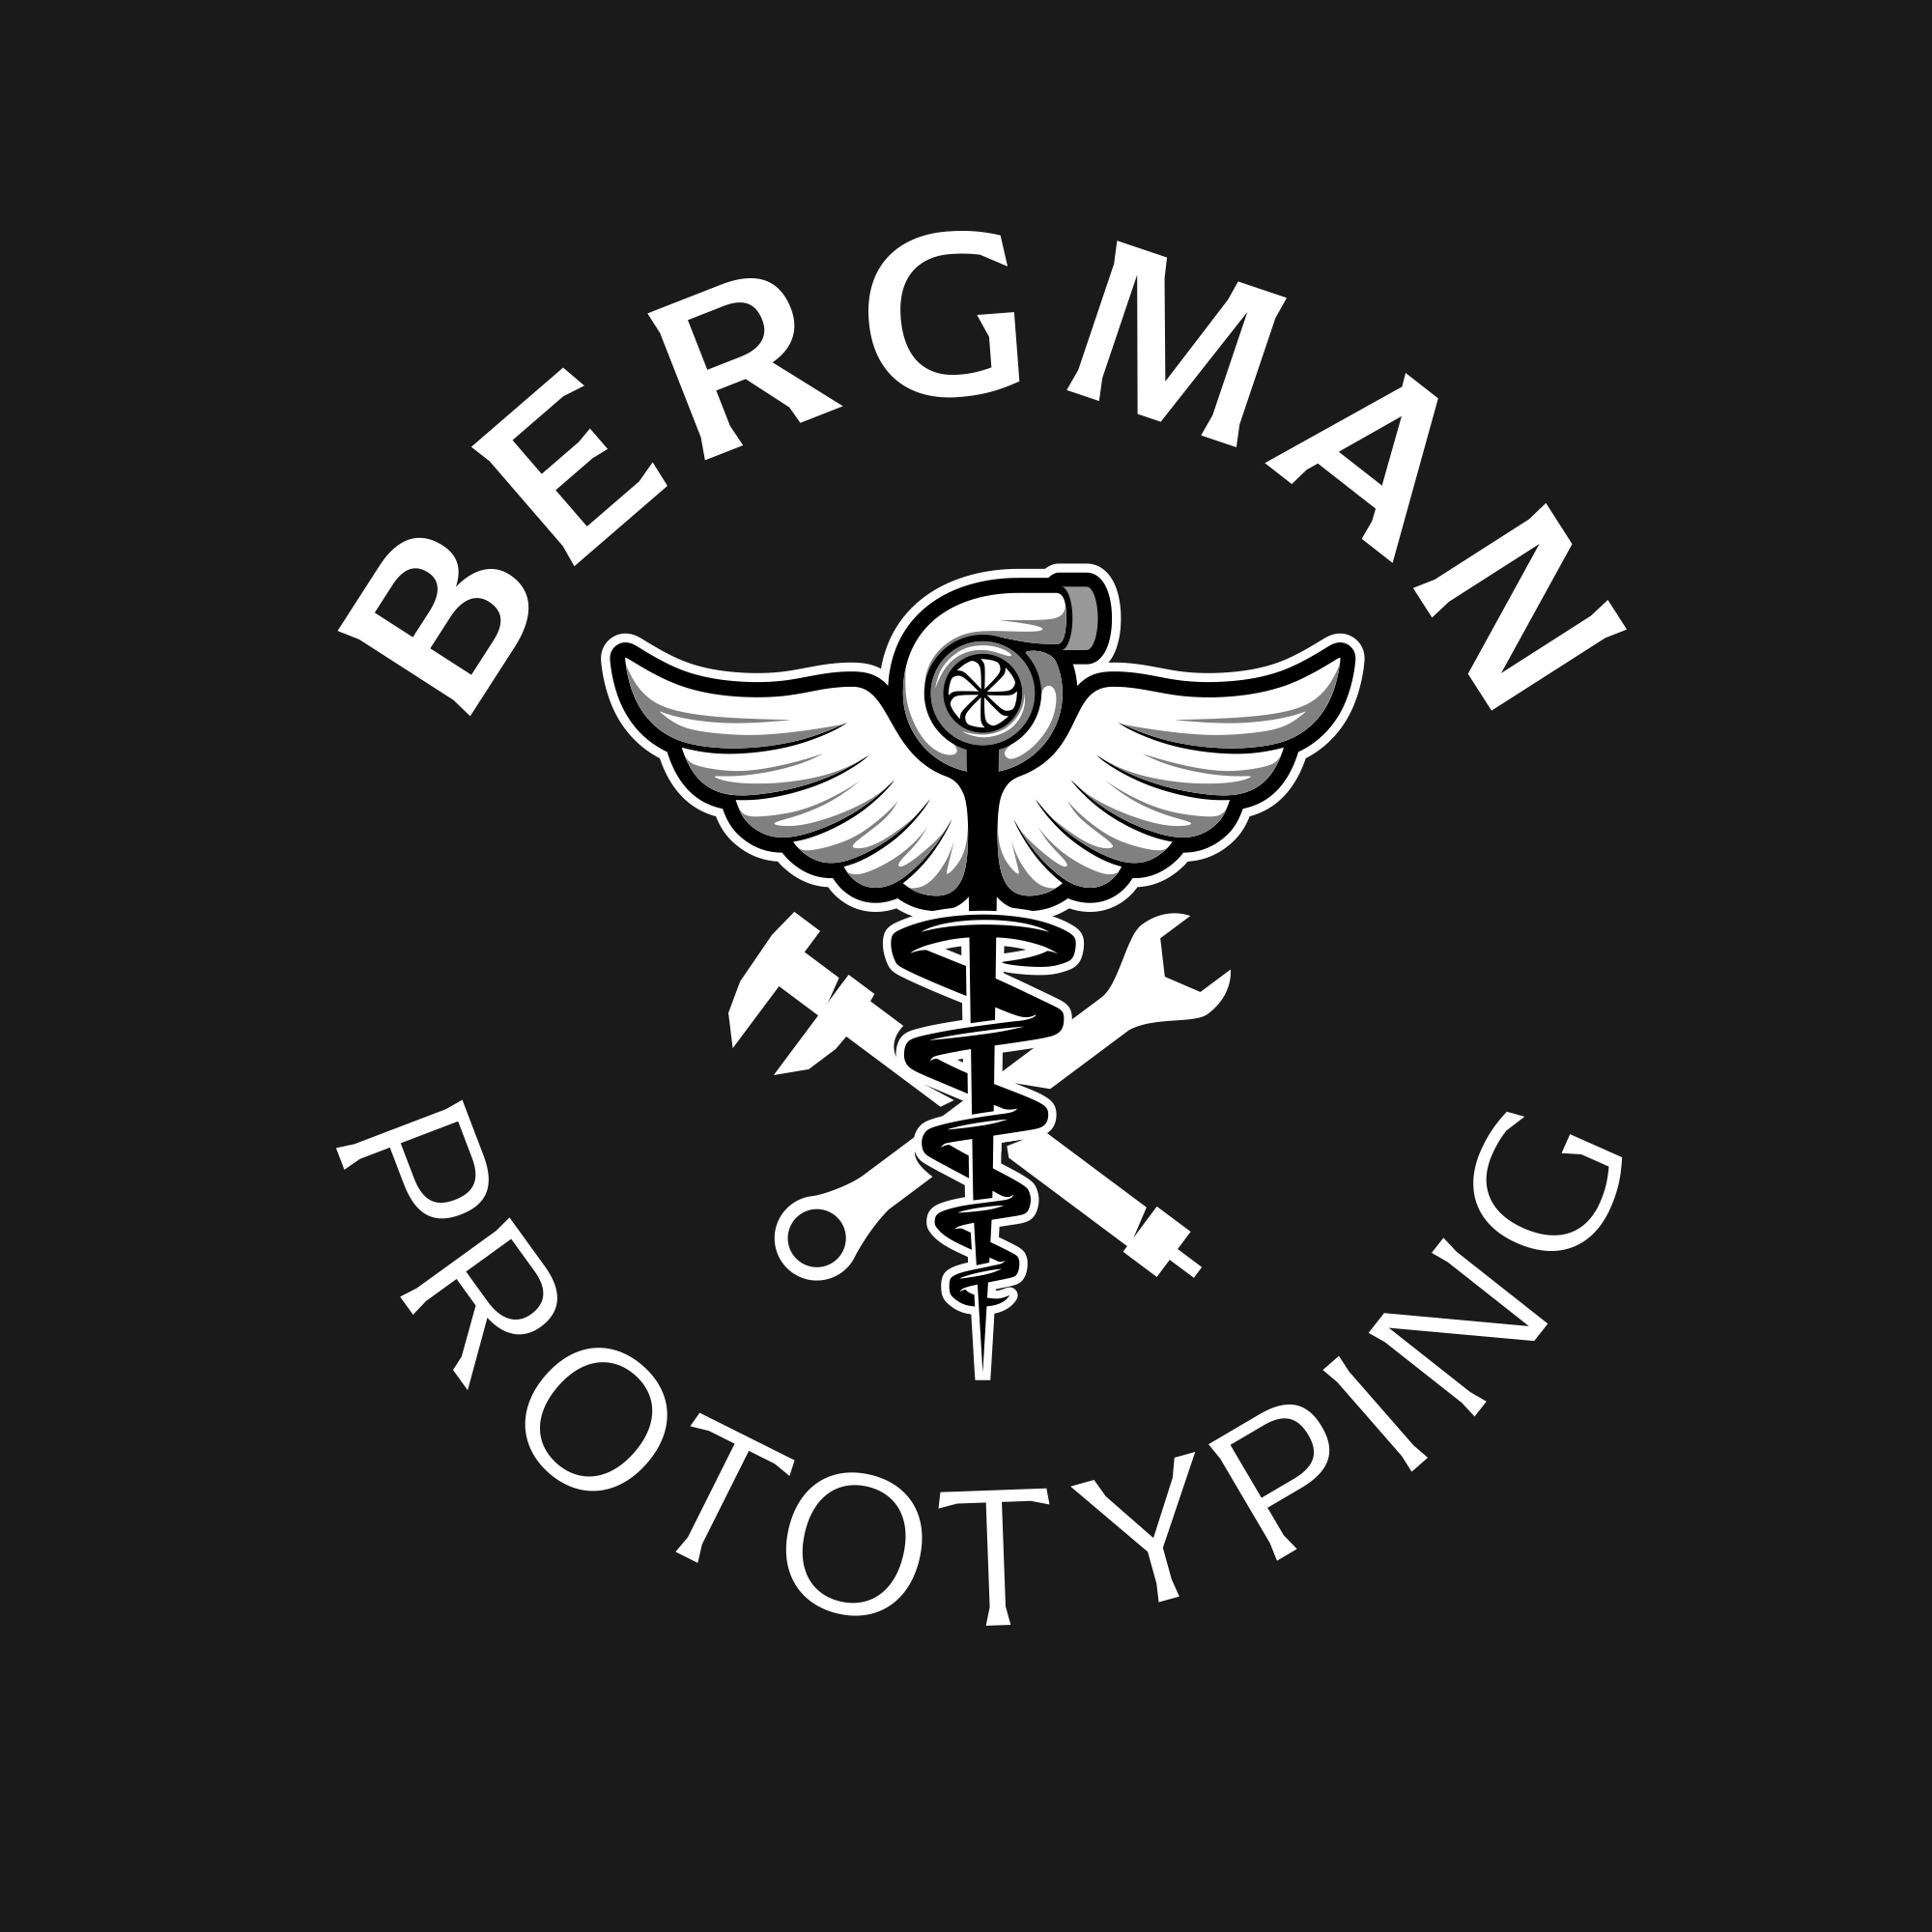 Bergman Prototyping